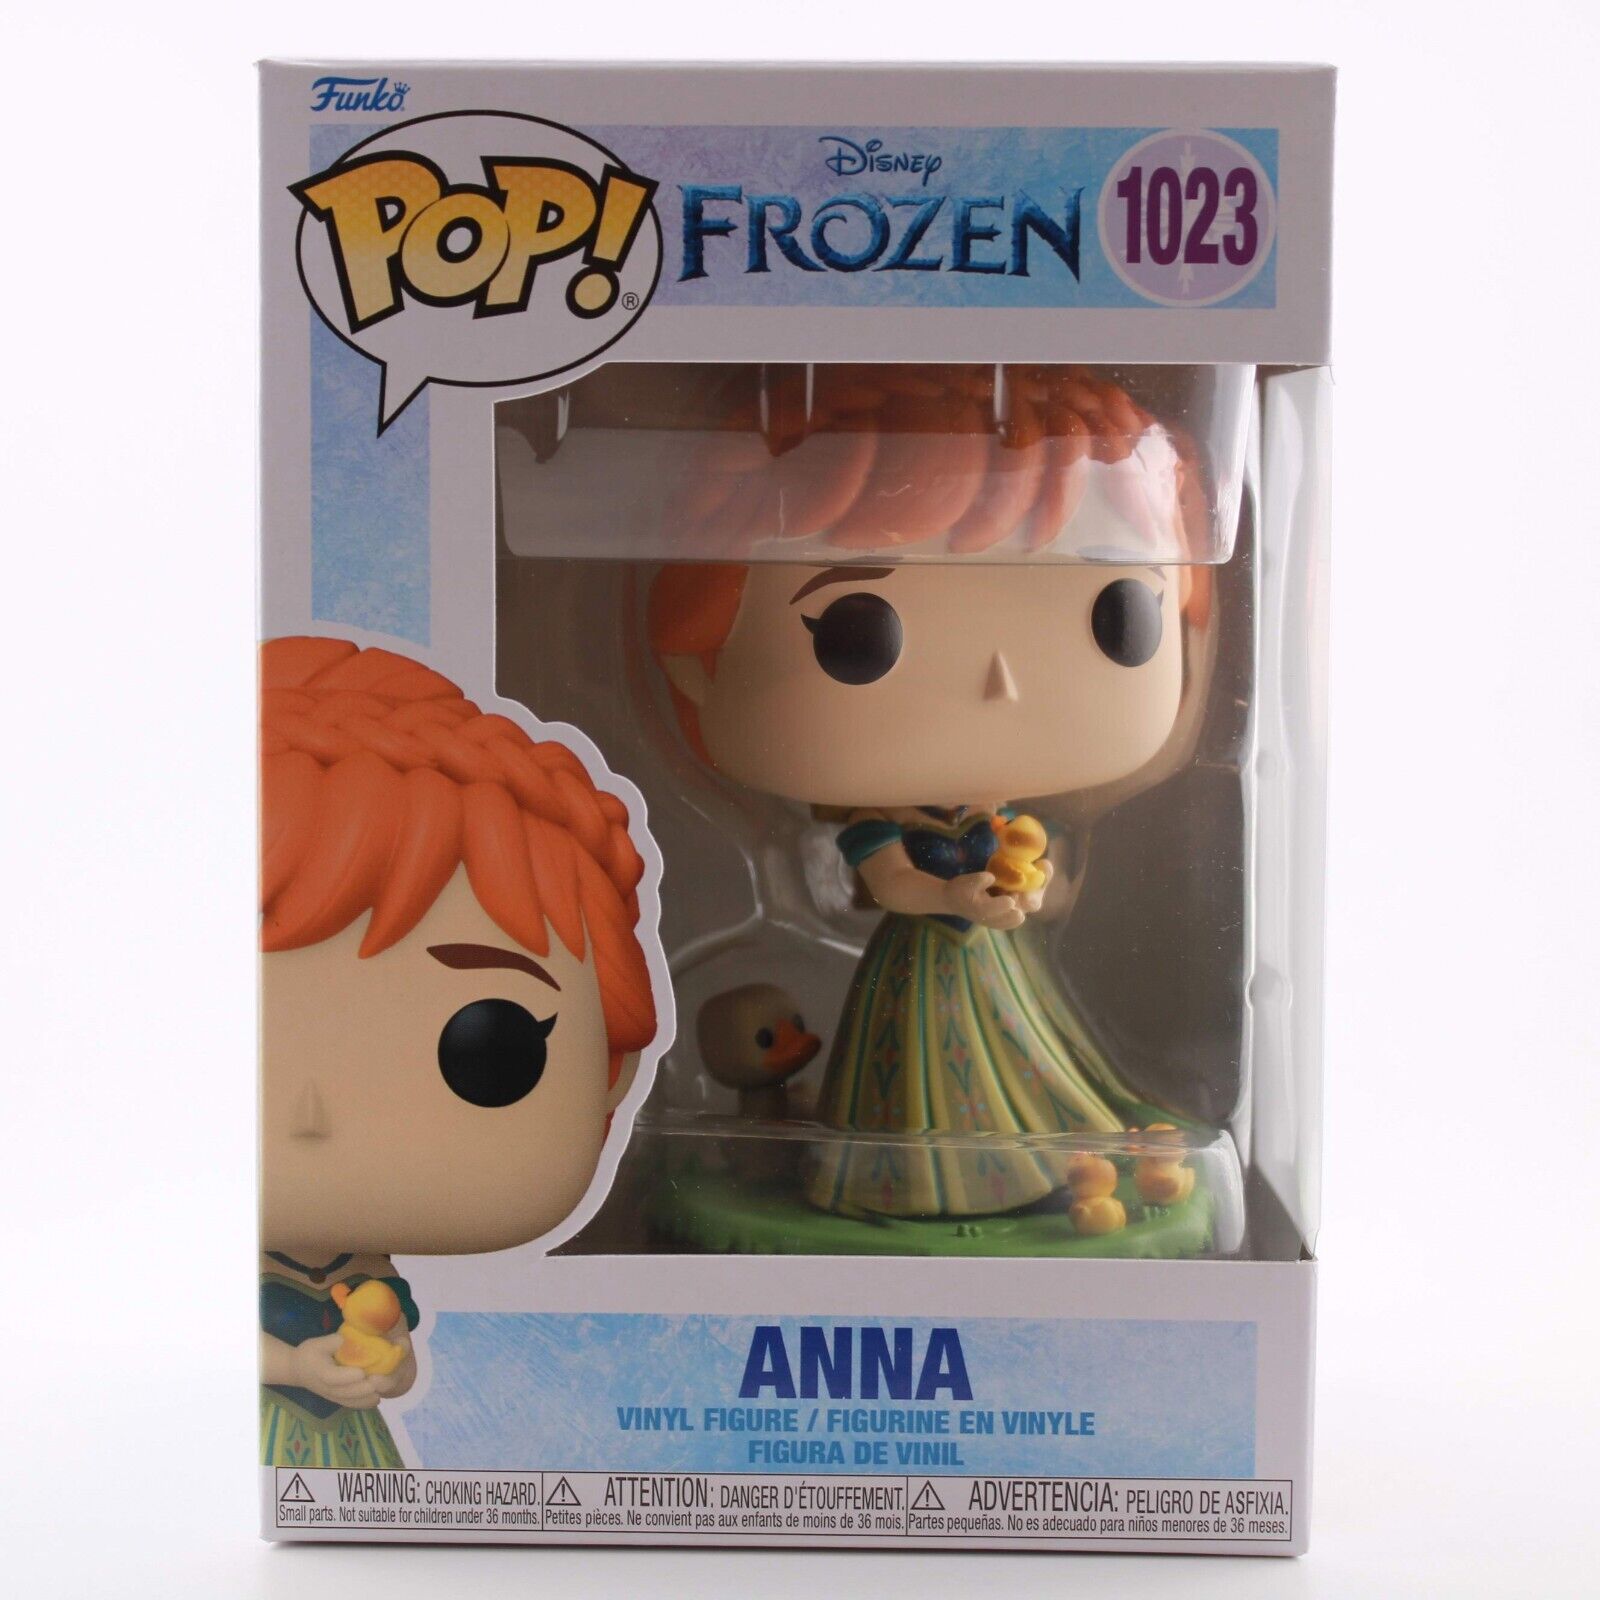 Ultimate Princess Figurine Anna 1023, Figurine Disney